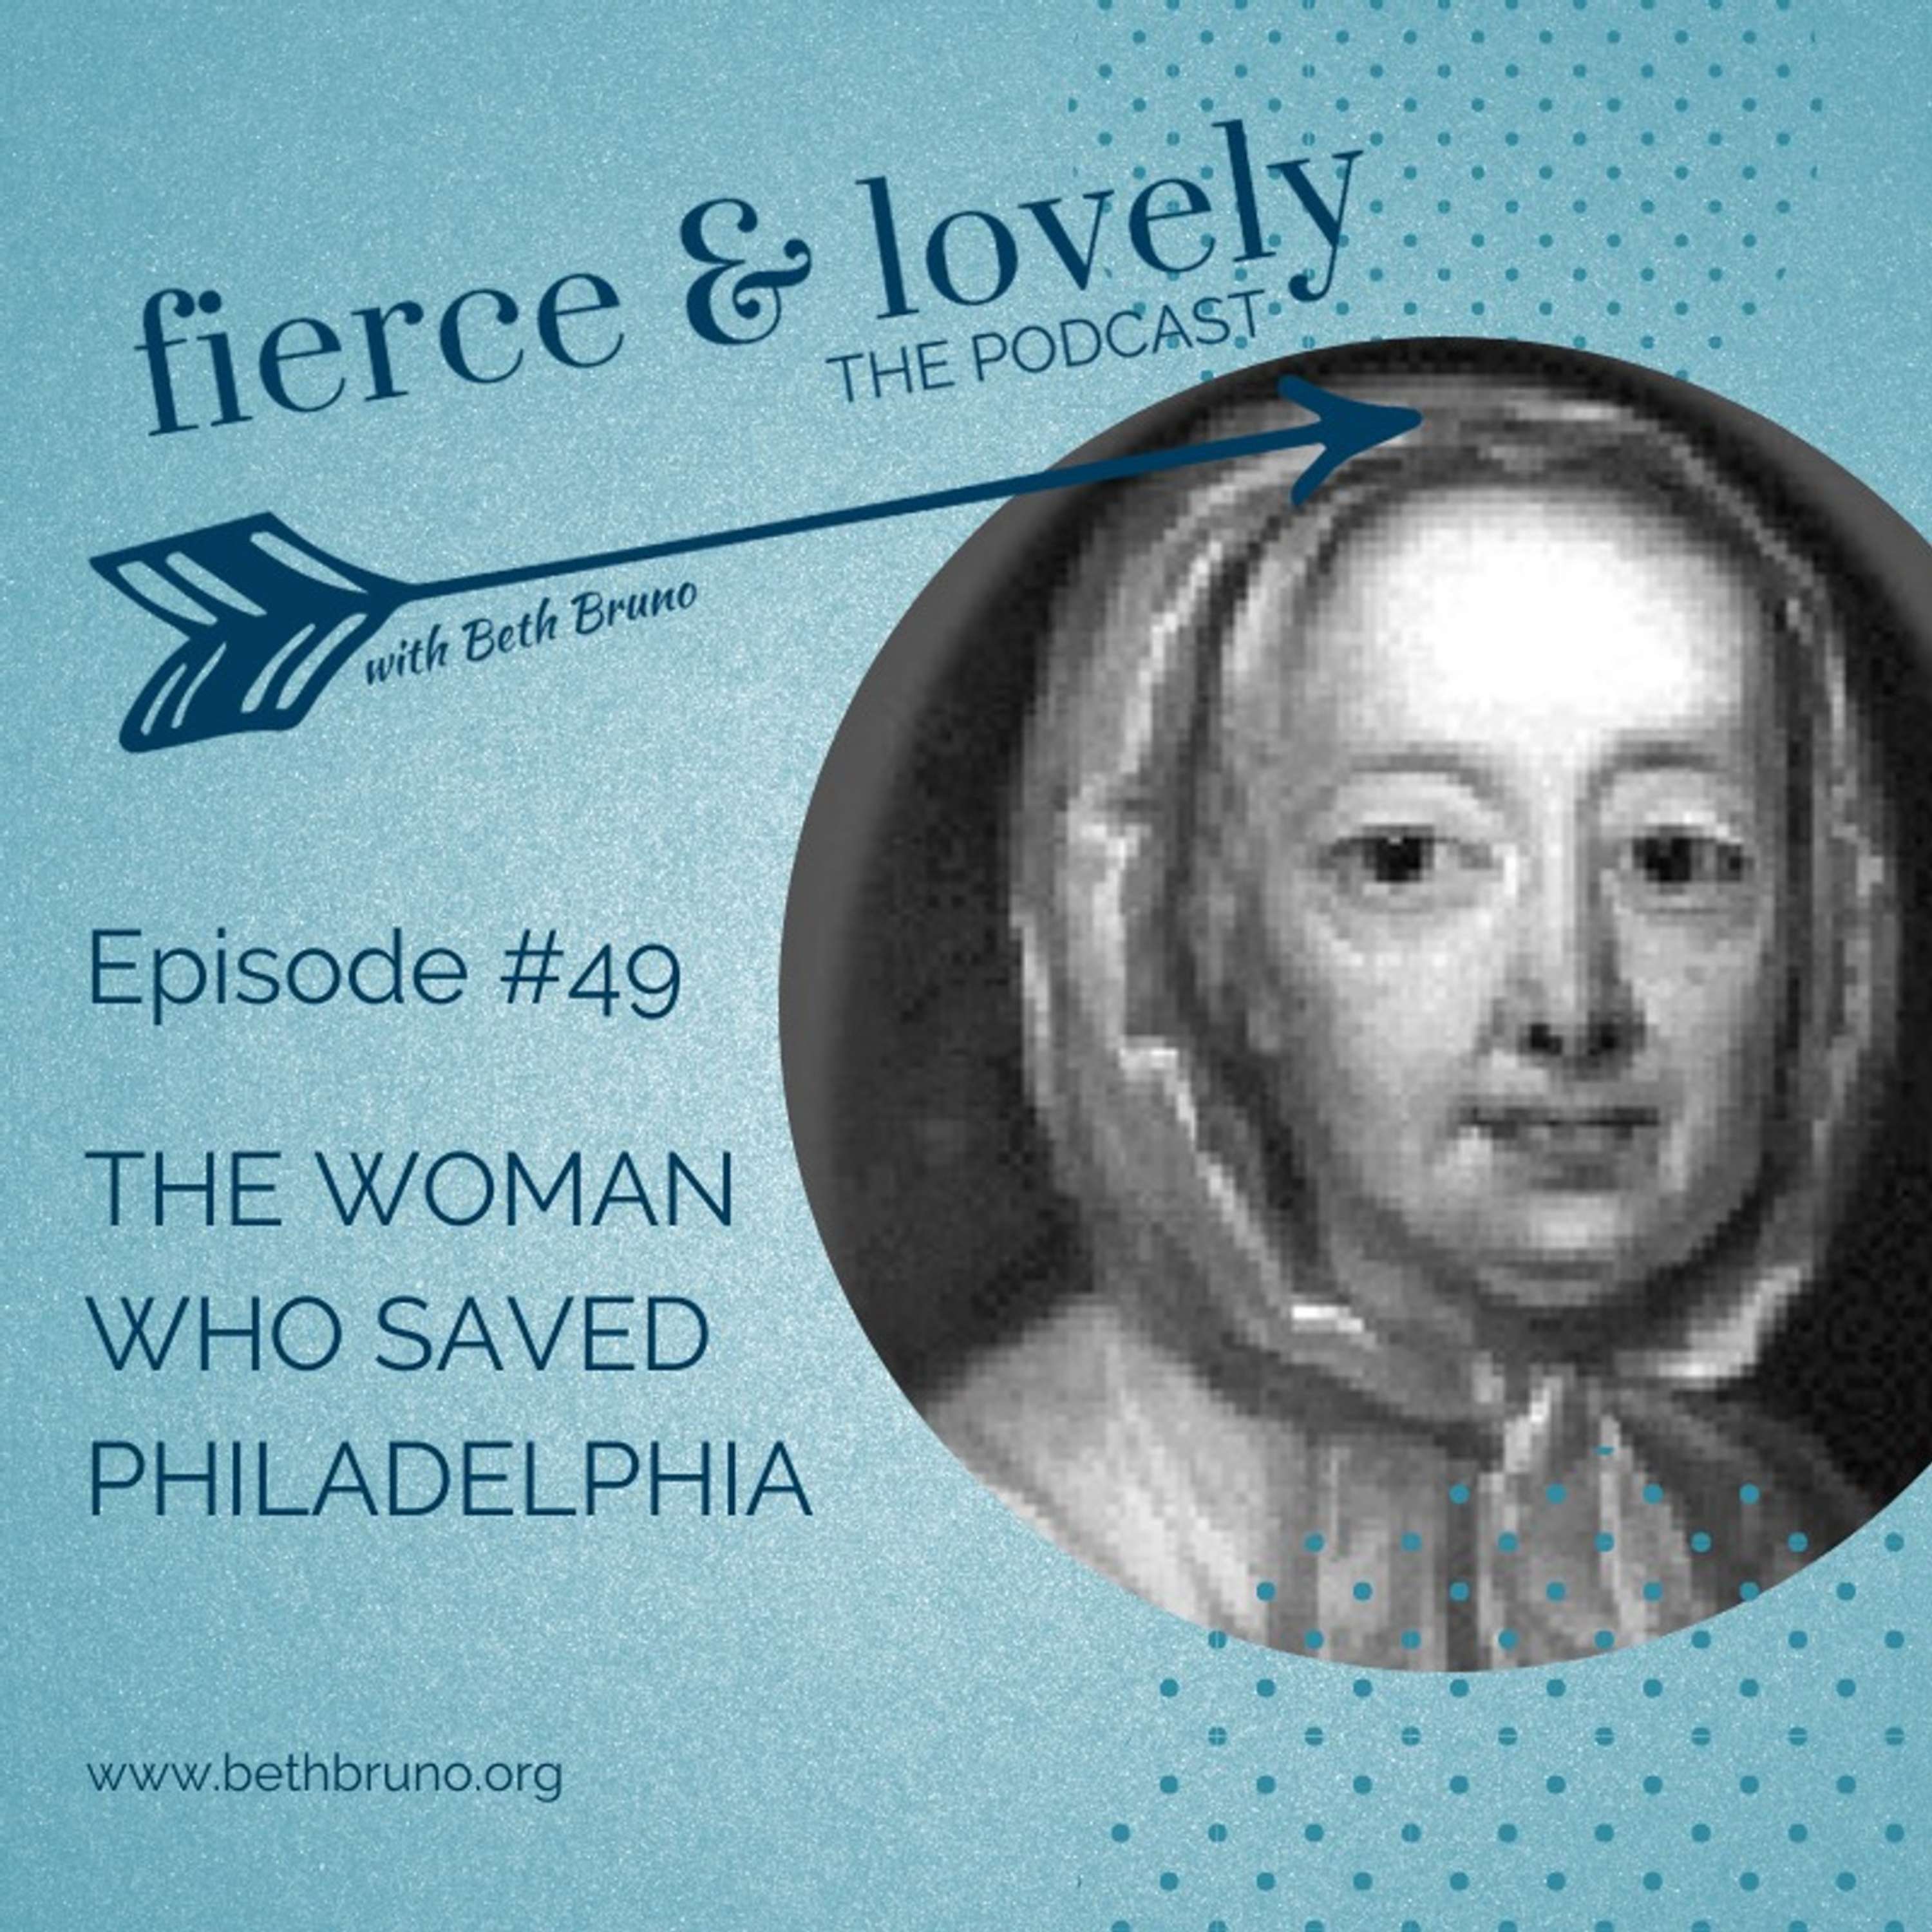 The Woman Who Saved Philadelphia